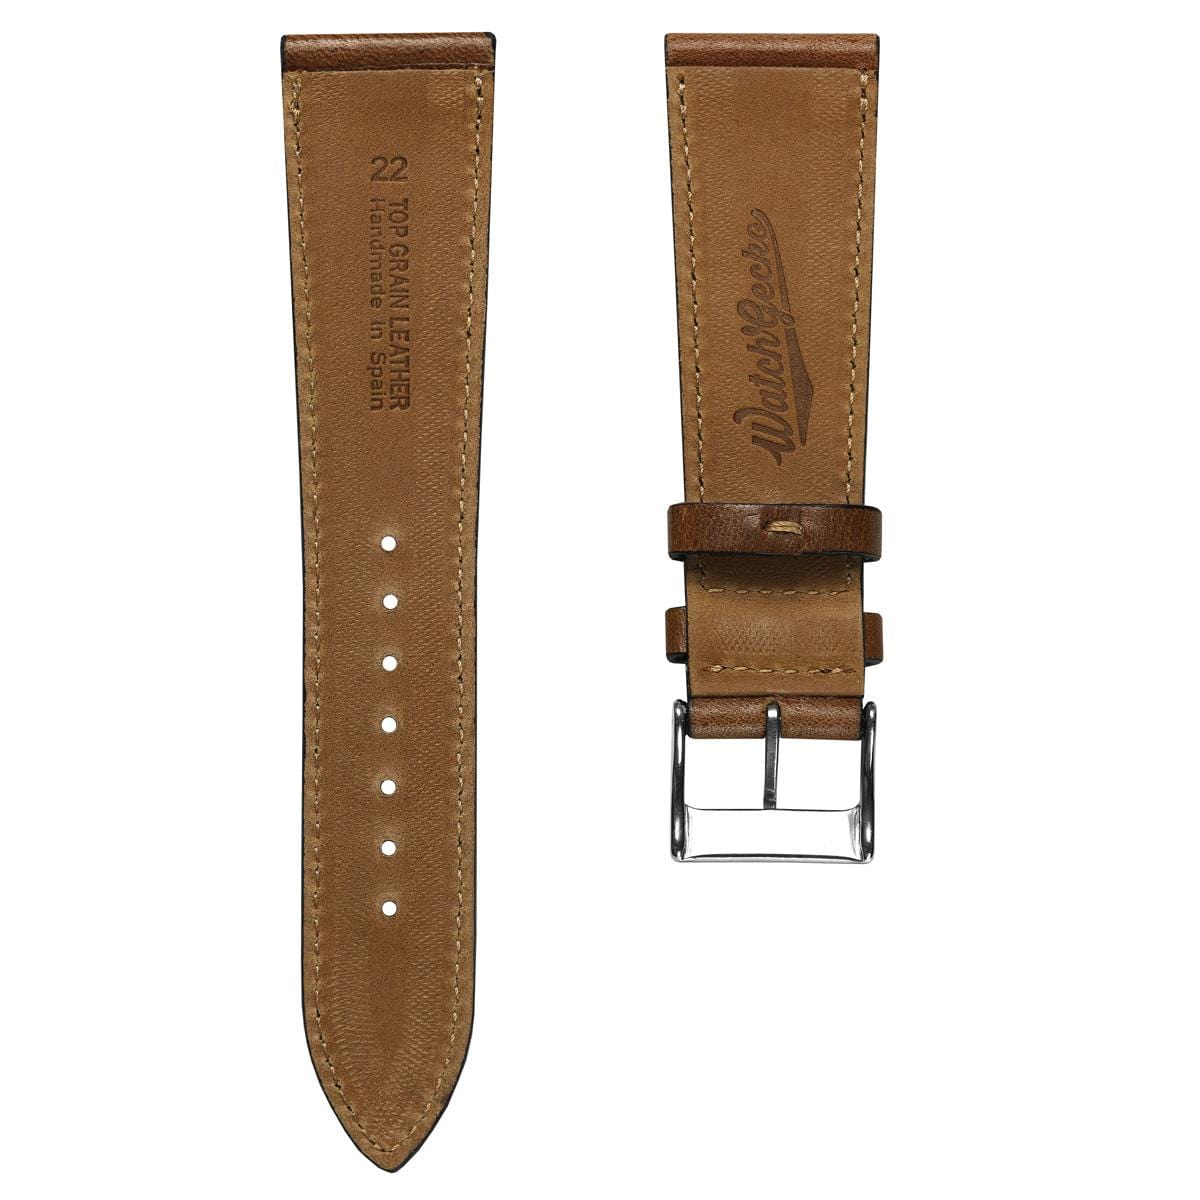 Radstock Missouri Vintage Leather Watch Strap - Light Brown